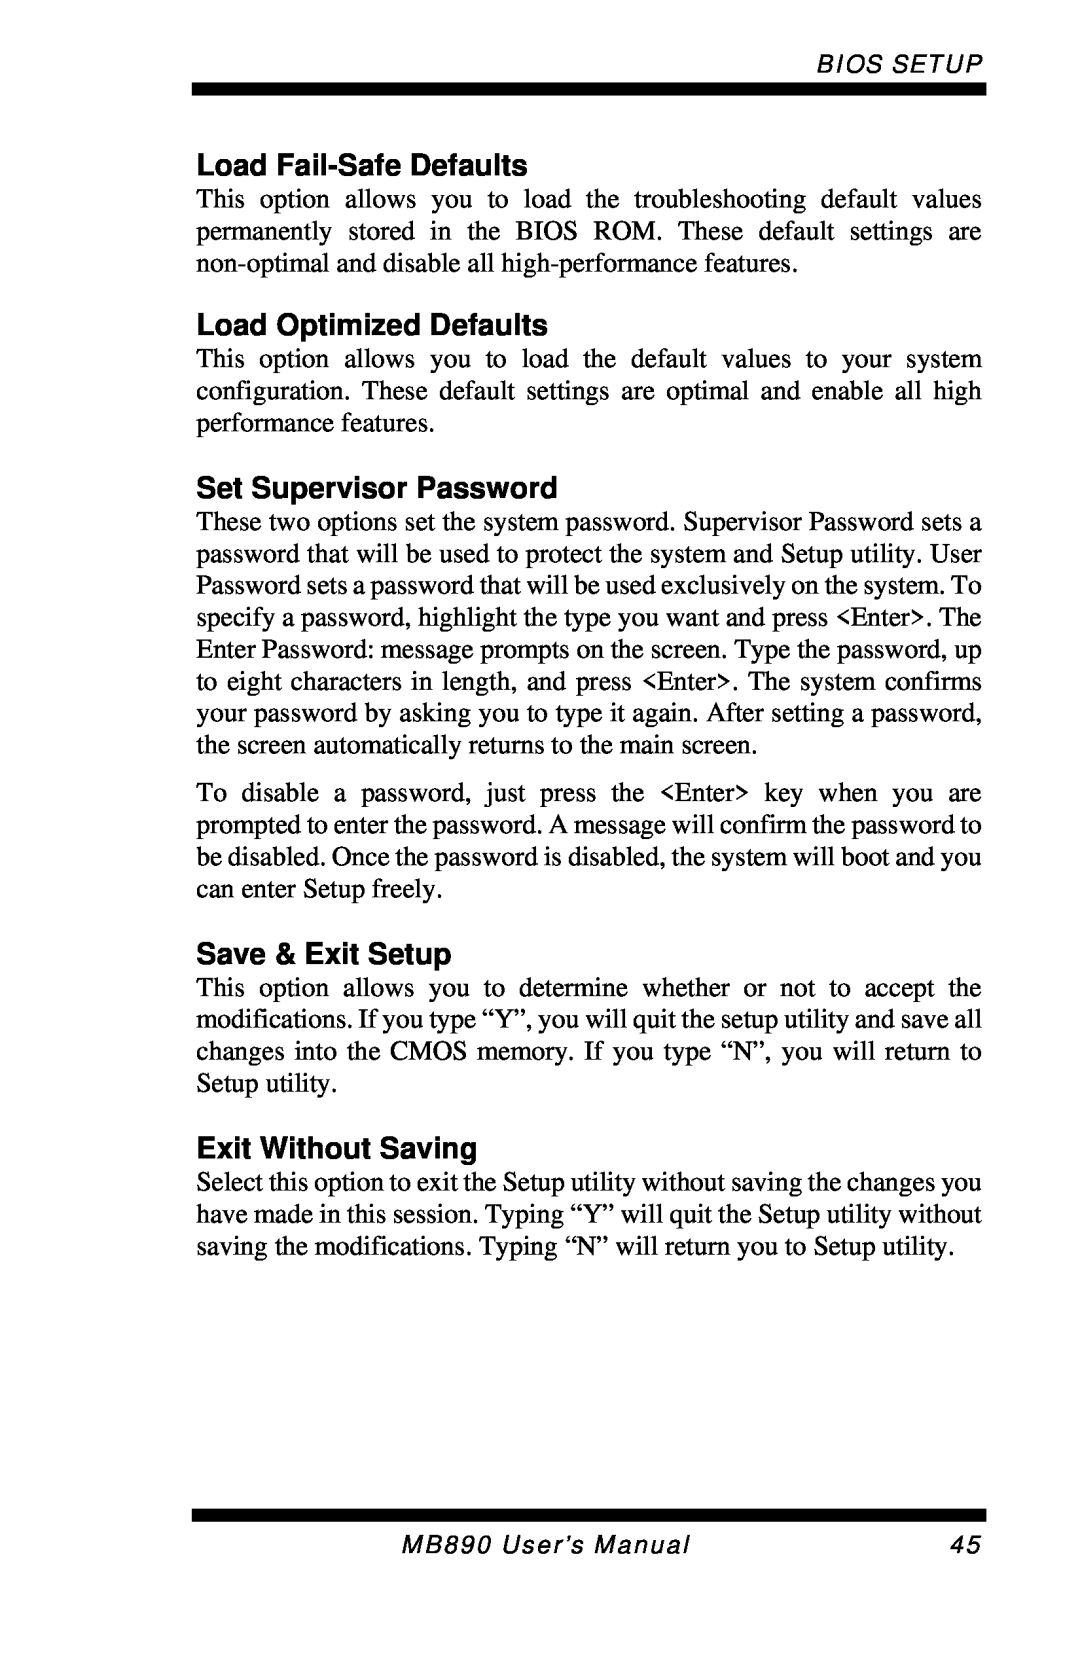 Intel MB890 user manual Load Fail-SafeDefaults, Load Optimized Defaults, Set Supervisor Password, Save & Exit Setup 